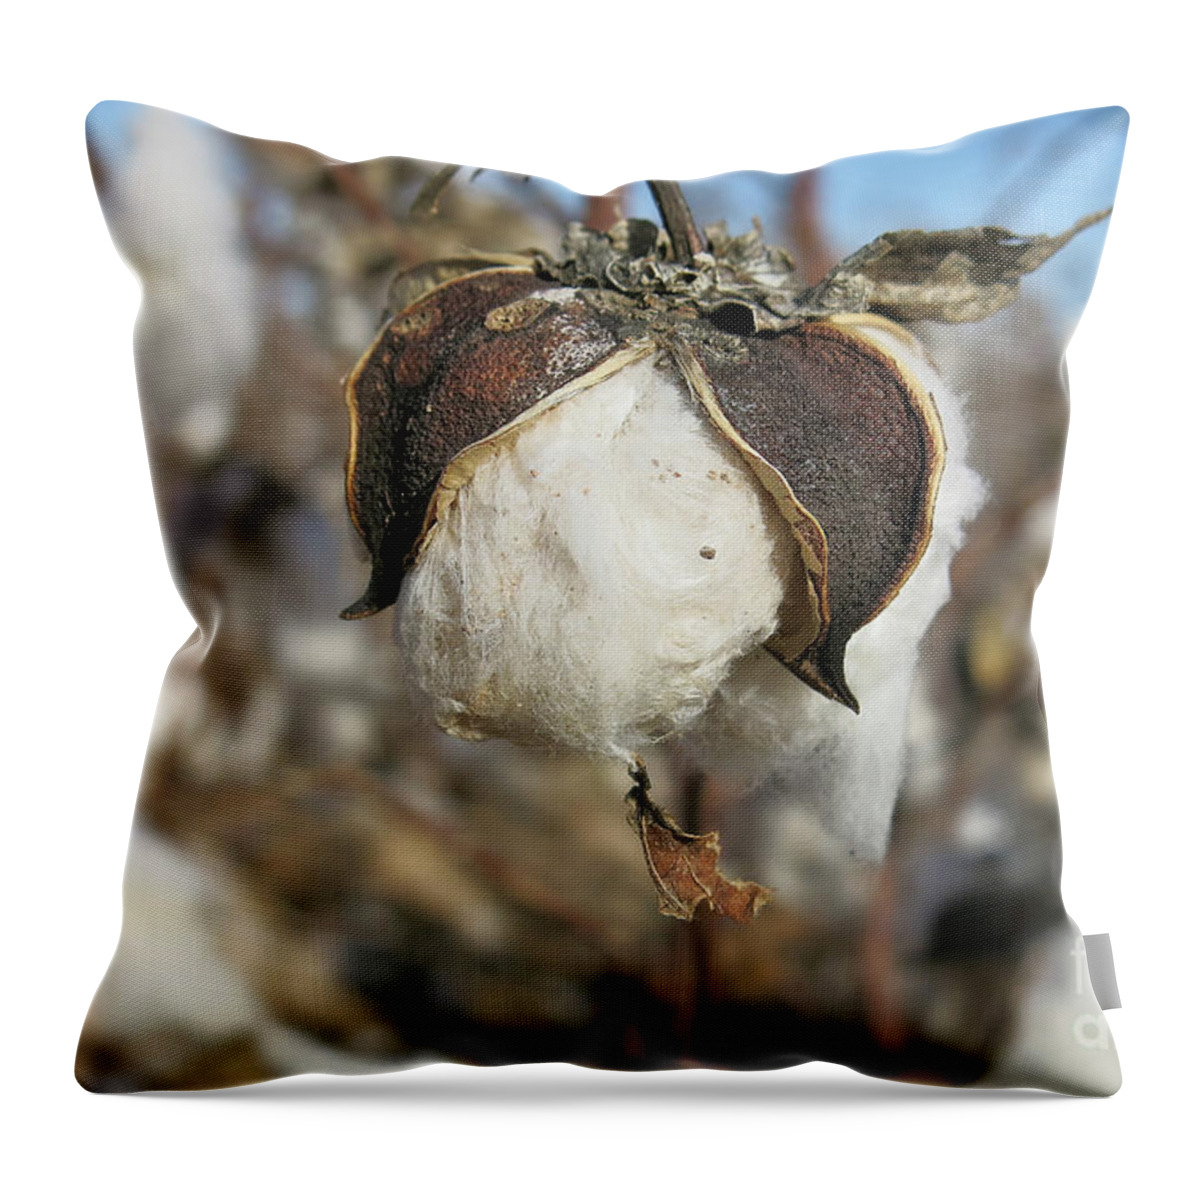 Cotton Boll Throw Pillow featuring the photograph Cotton Boll by Teresa Zieba